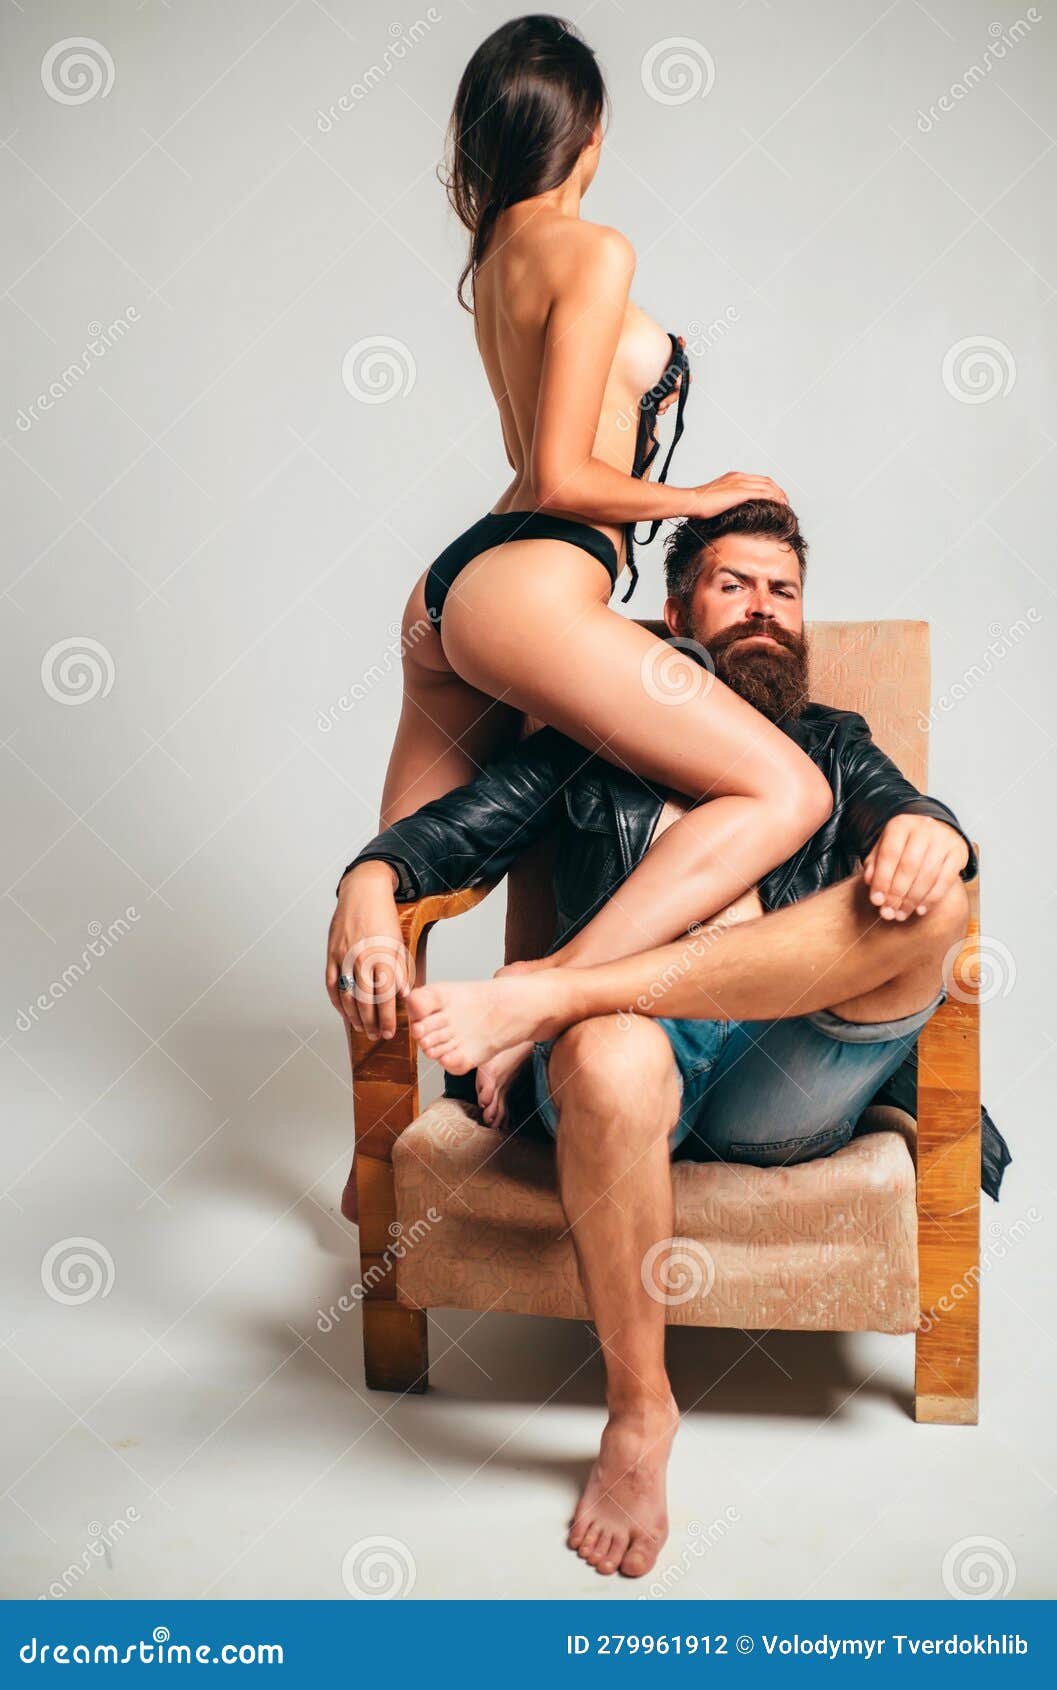 wife striptease on chair